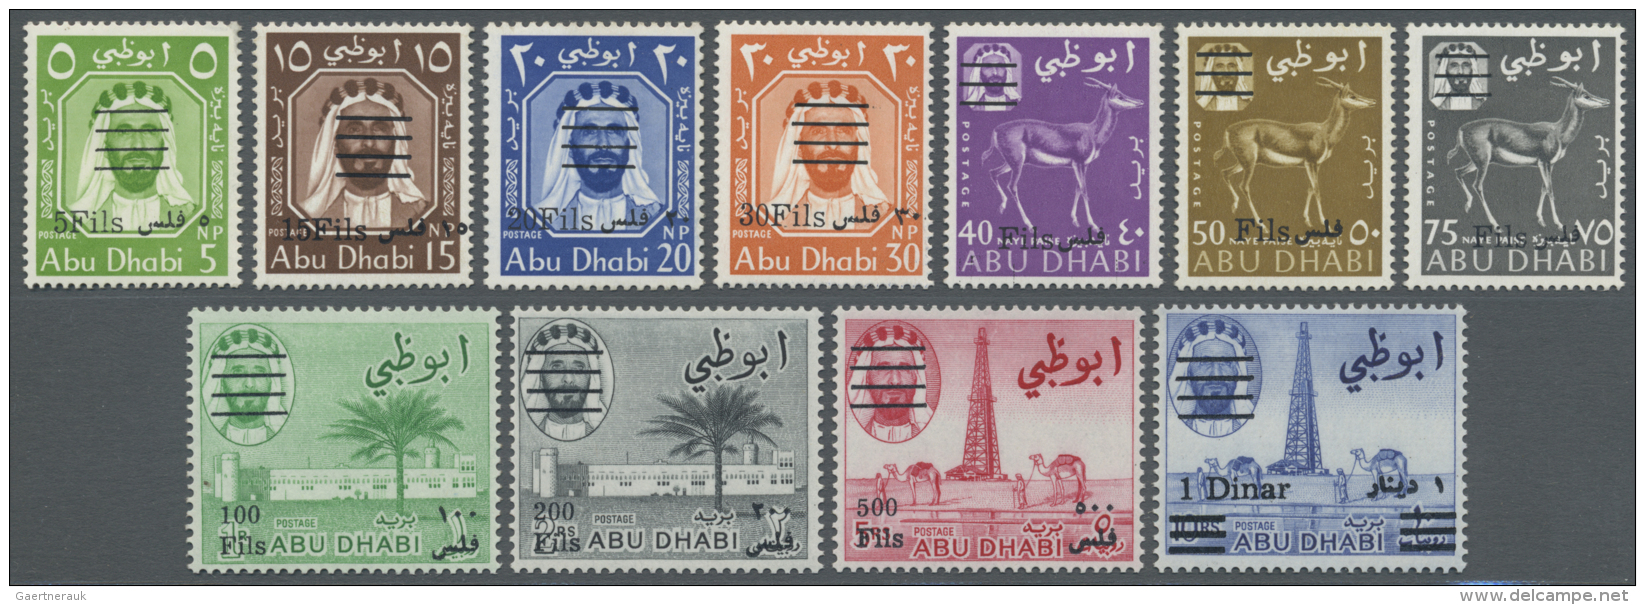 Abu Dhabi: 1966 New Currency Complete Optd. Set Of 11, Mint Never Hinged, Fresh And Very Fine. (Mi. 380 &euro;) - Abu Dhabi